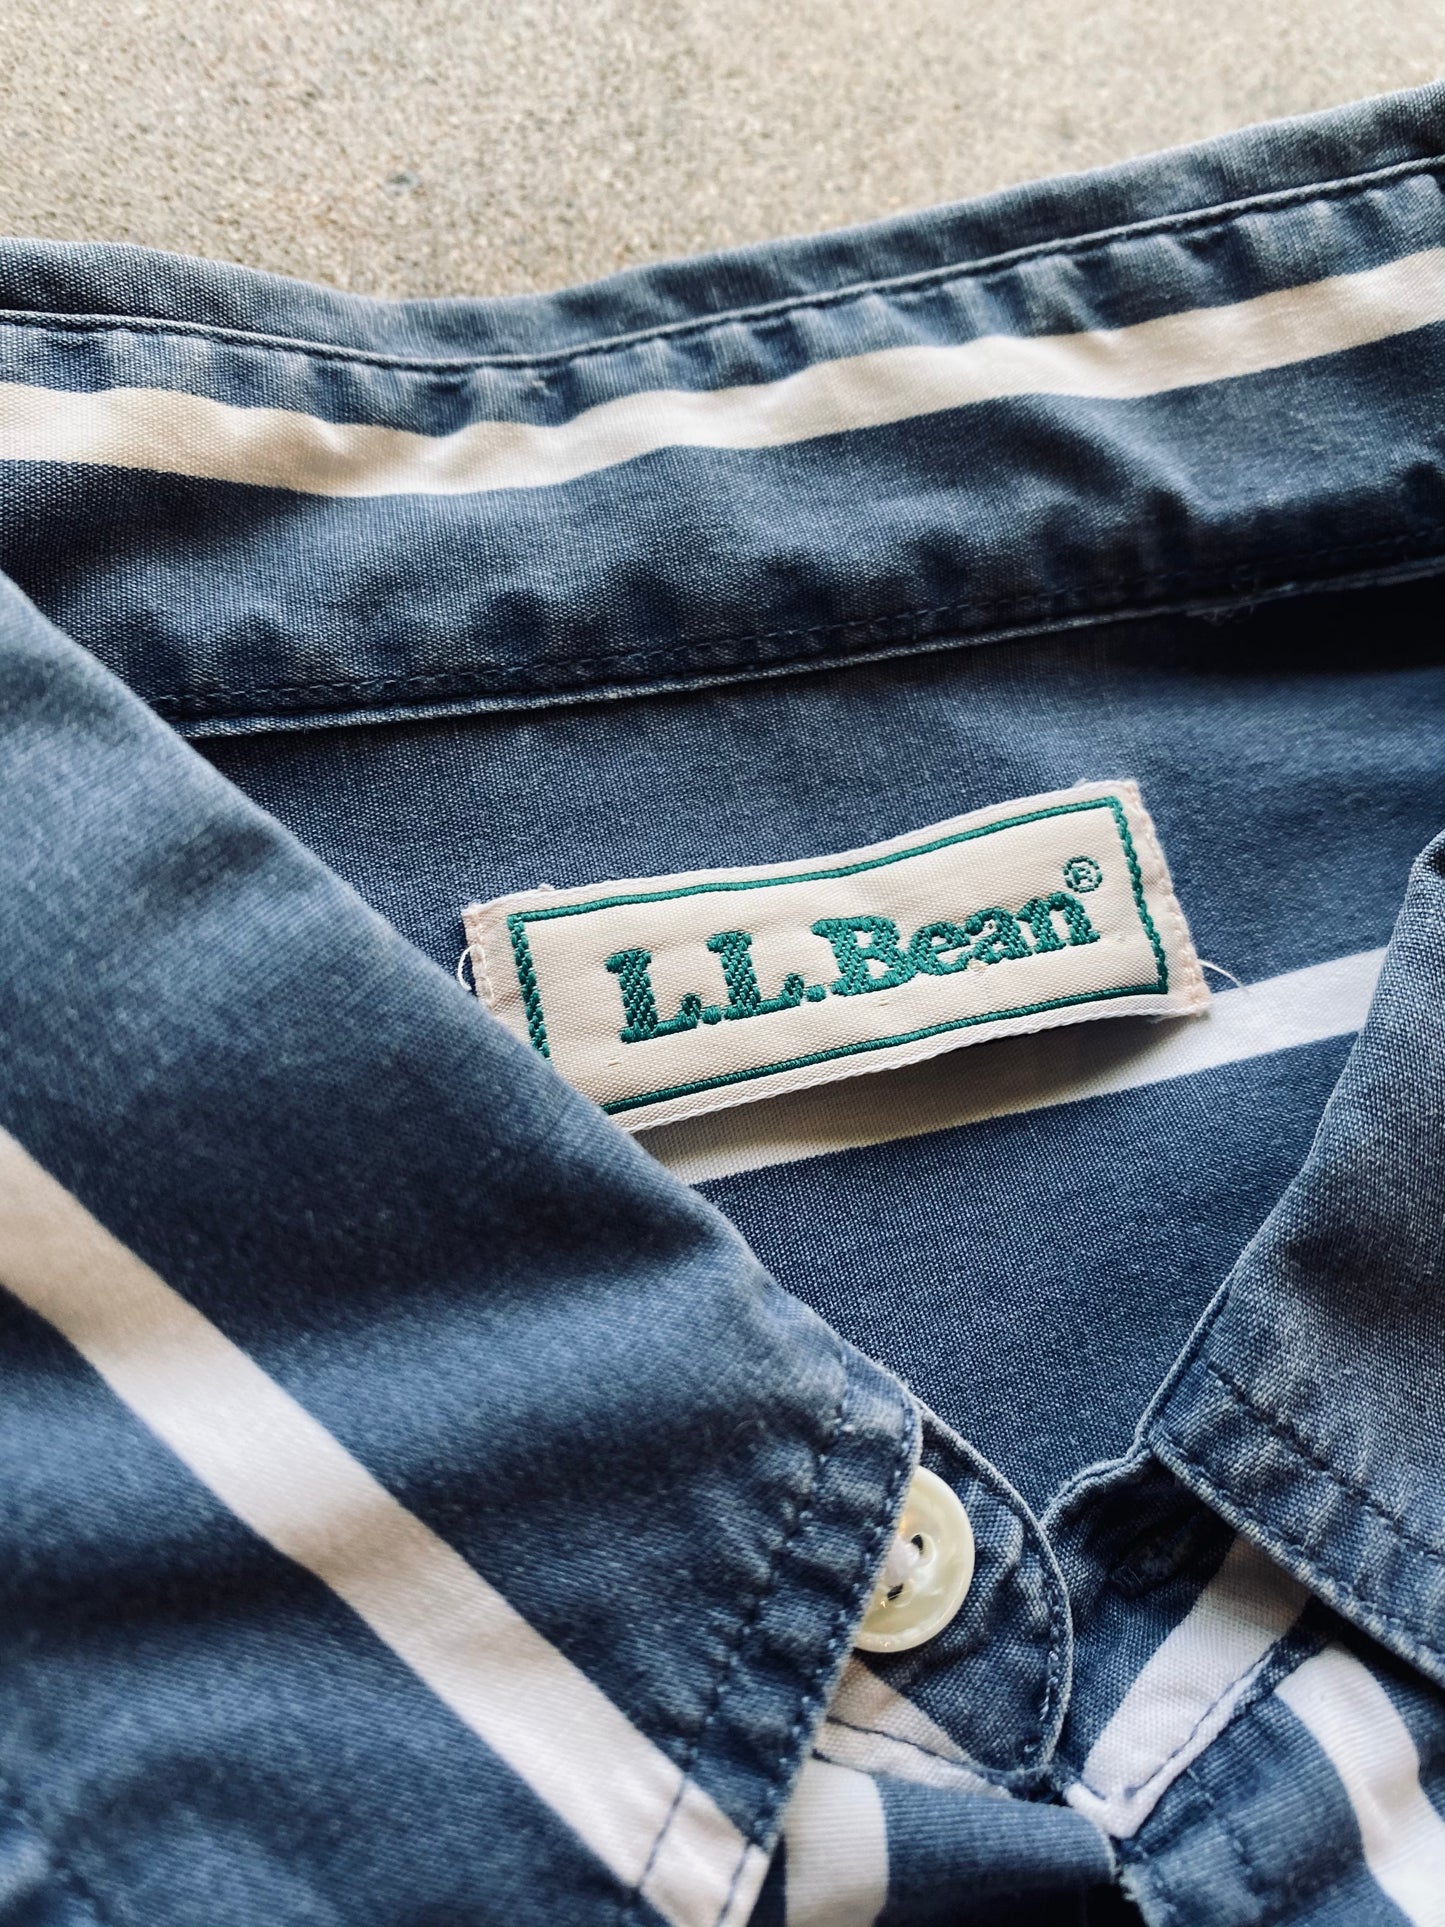 1990’s L.L. Bean Striped Shirt